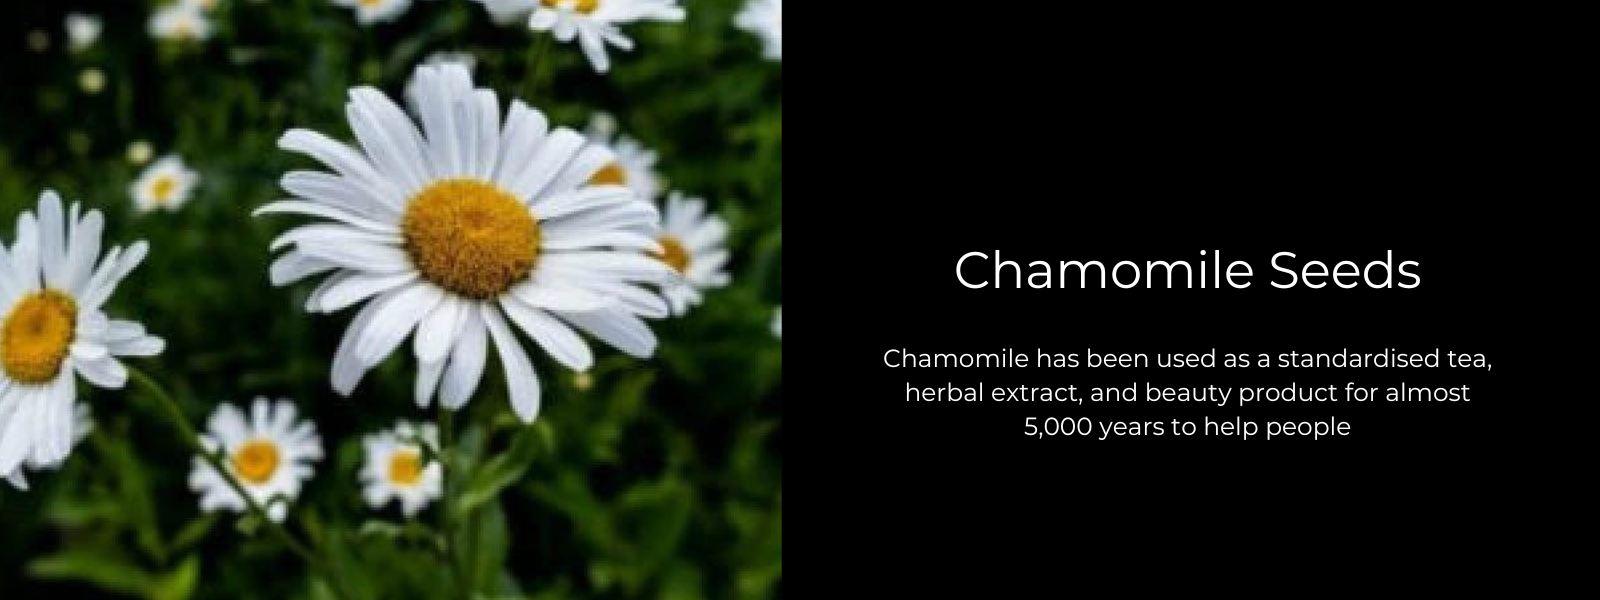 Roman Chamomile Uses and Benefits